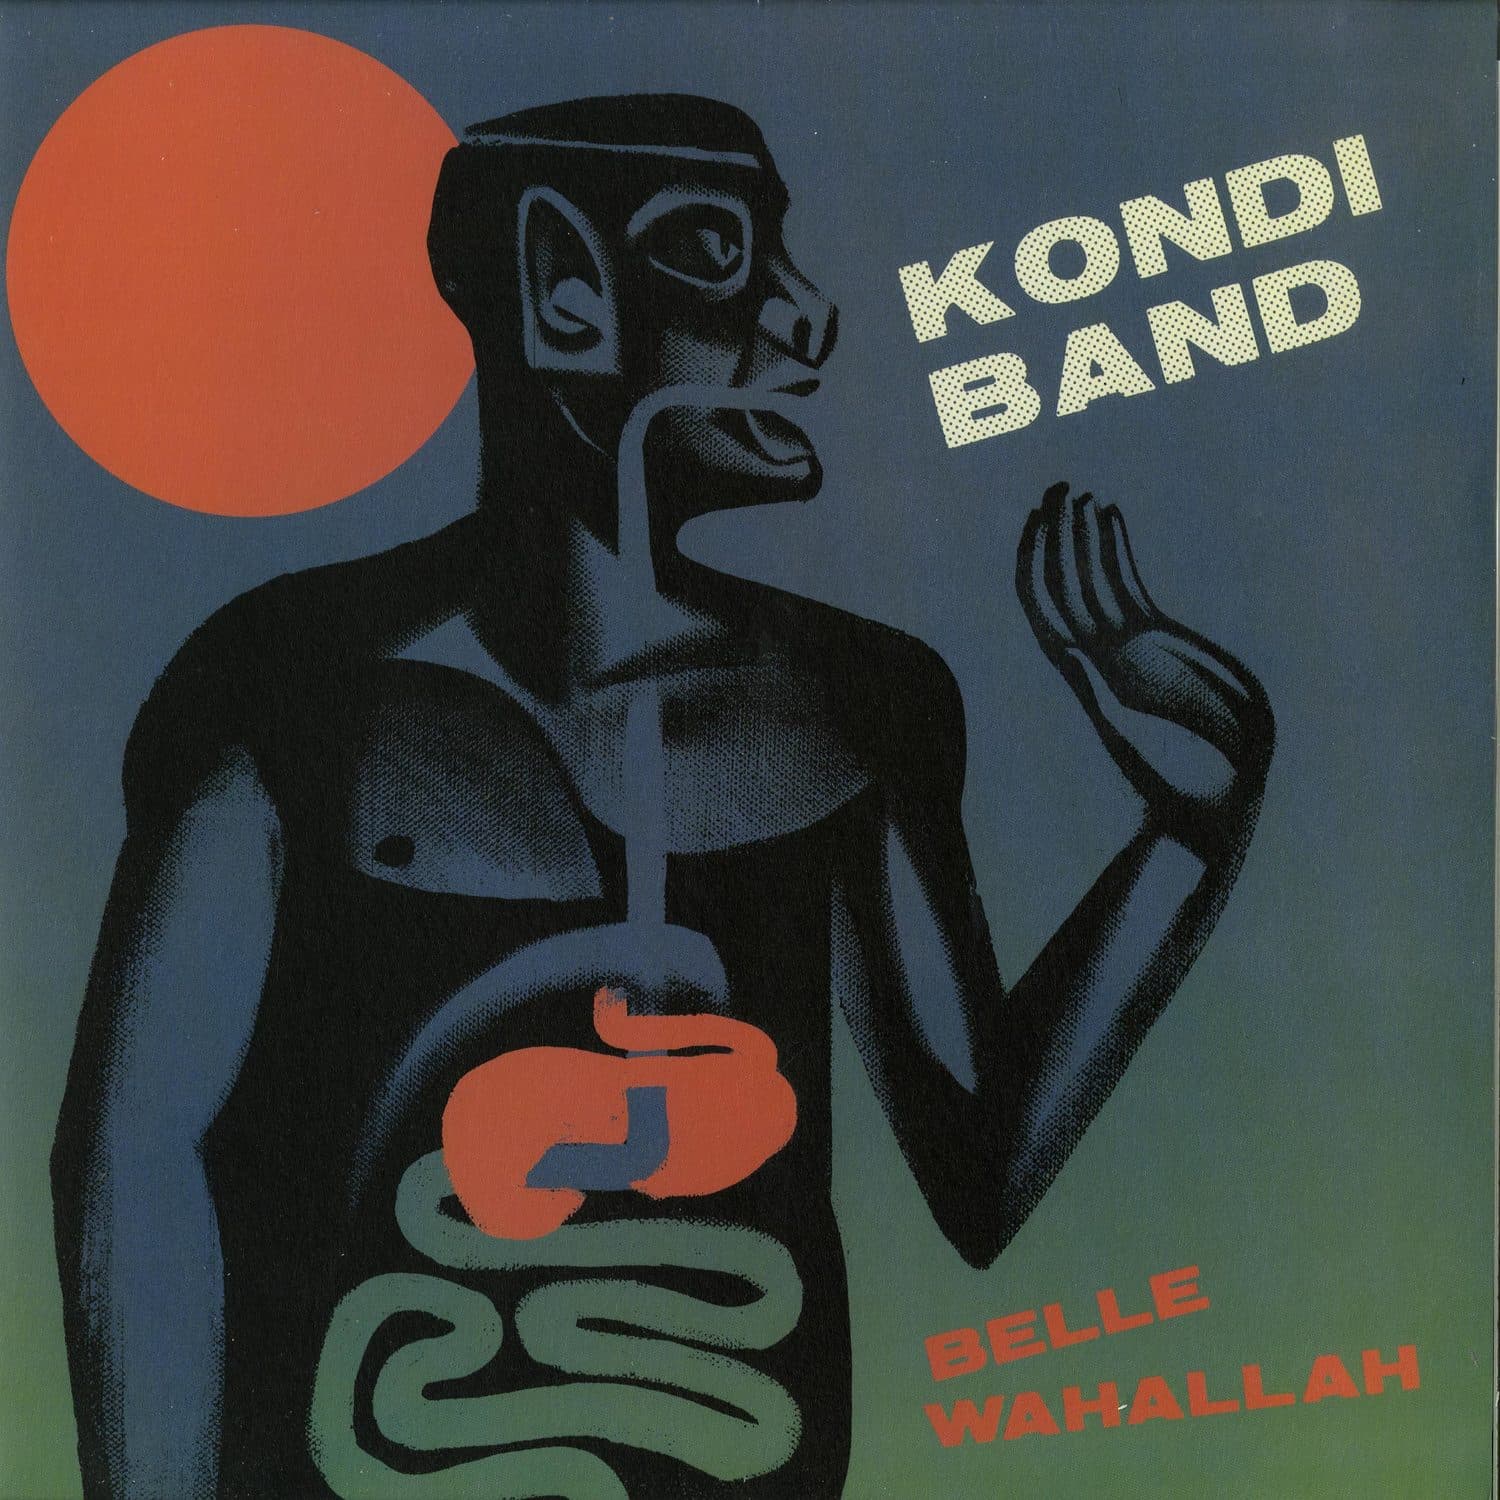 Kondi Band - BELLE WAHALLAH EP